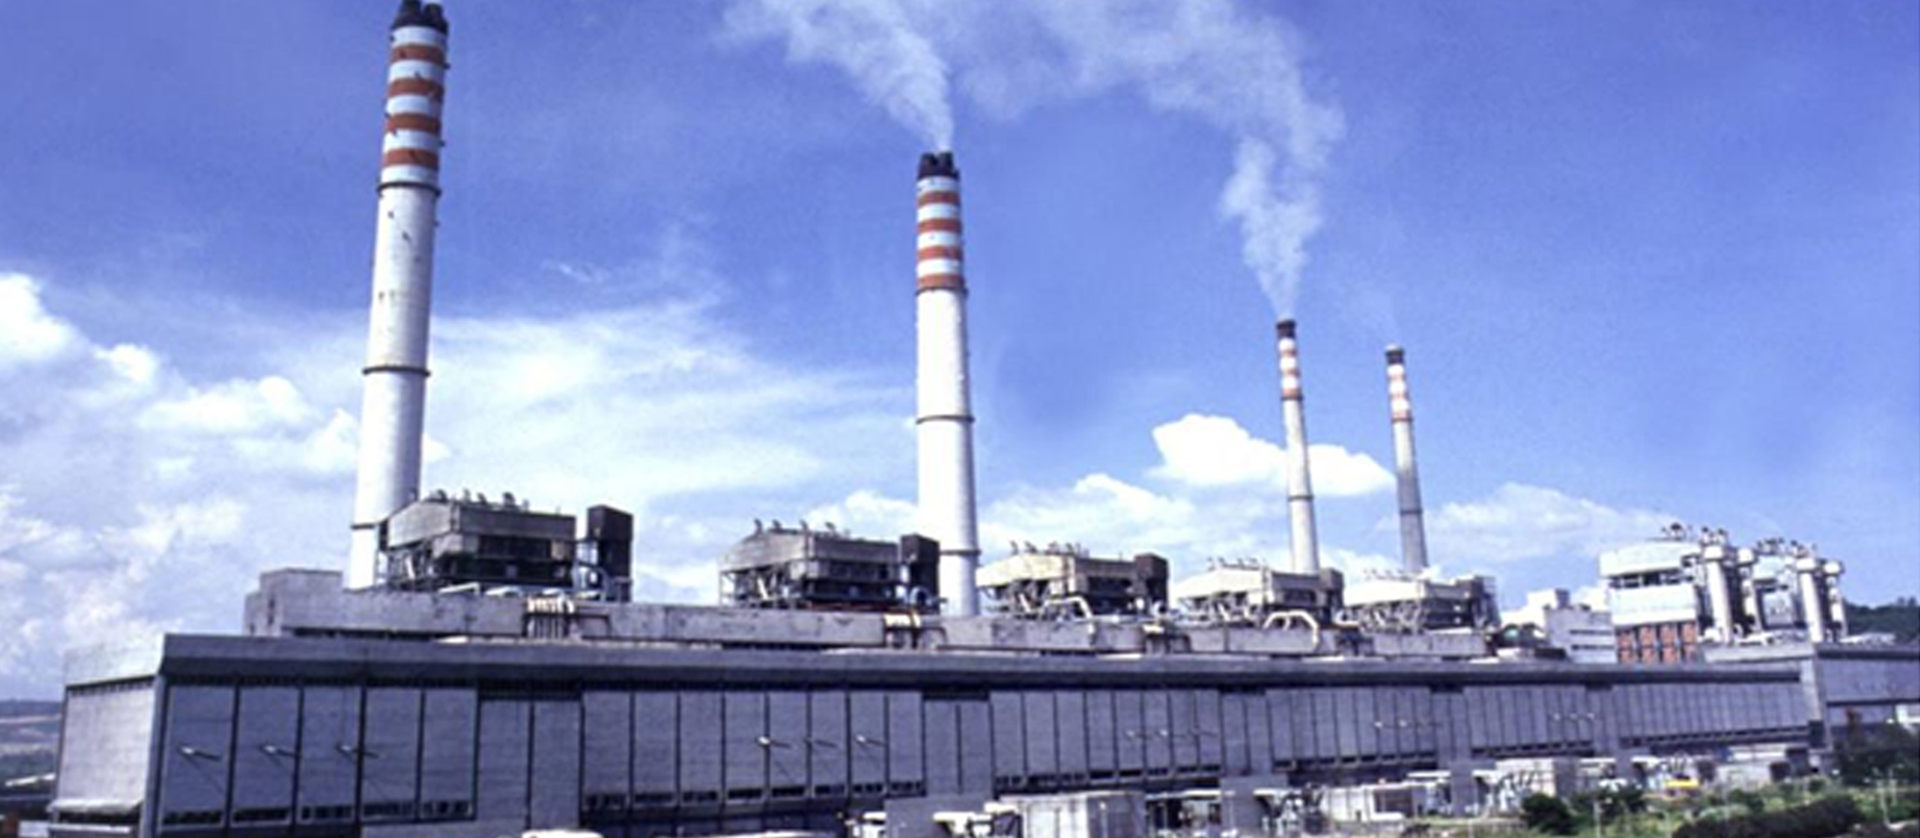 NTPC Super Thermal Power Station: Singrauli, Uttar Pradesh